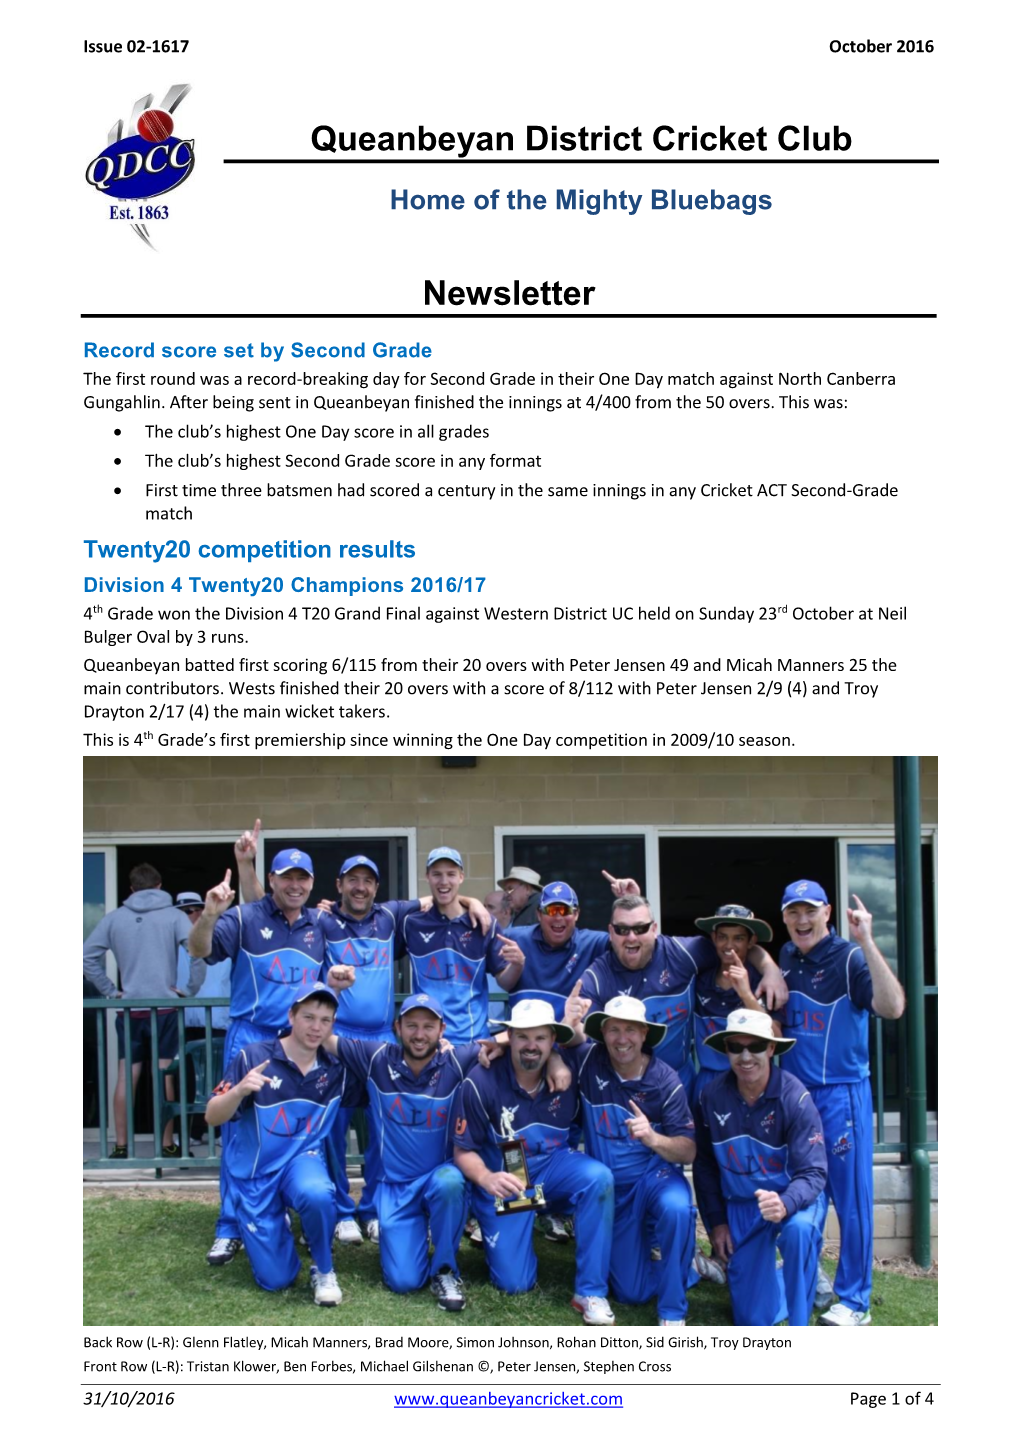 Newsletter Queanbeyan District Cricket Club